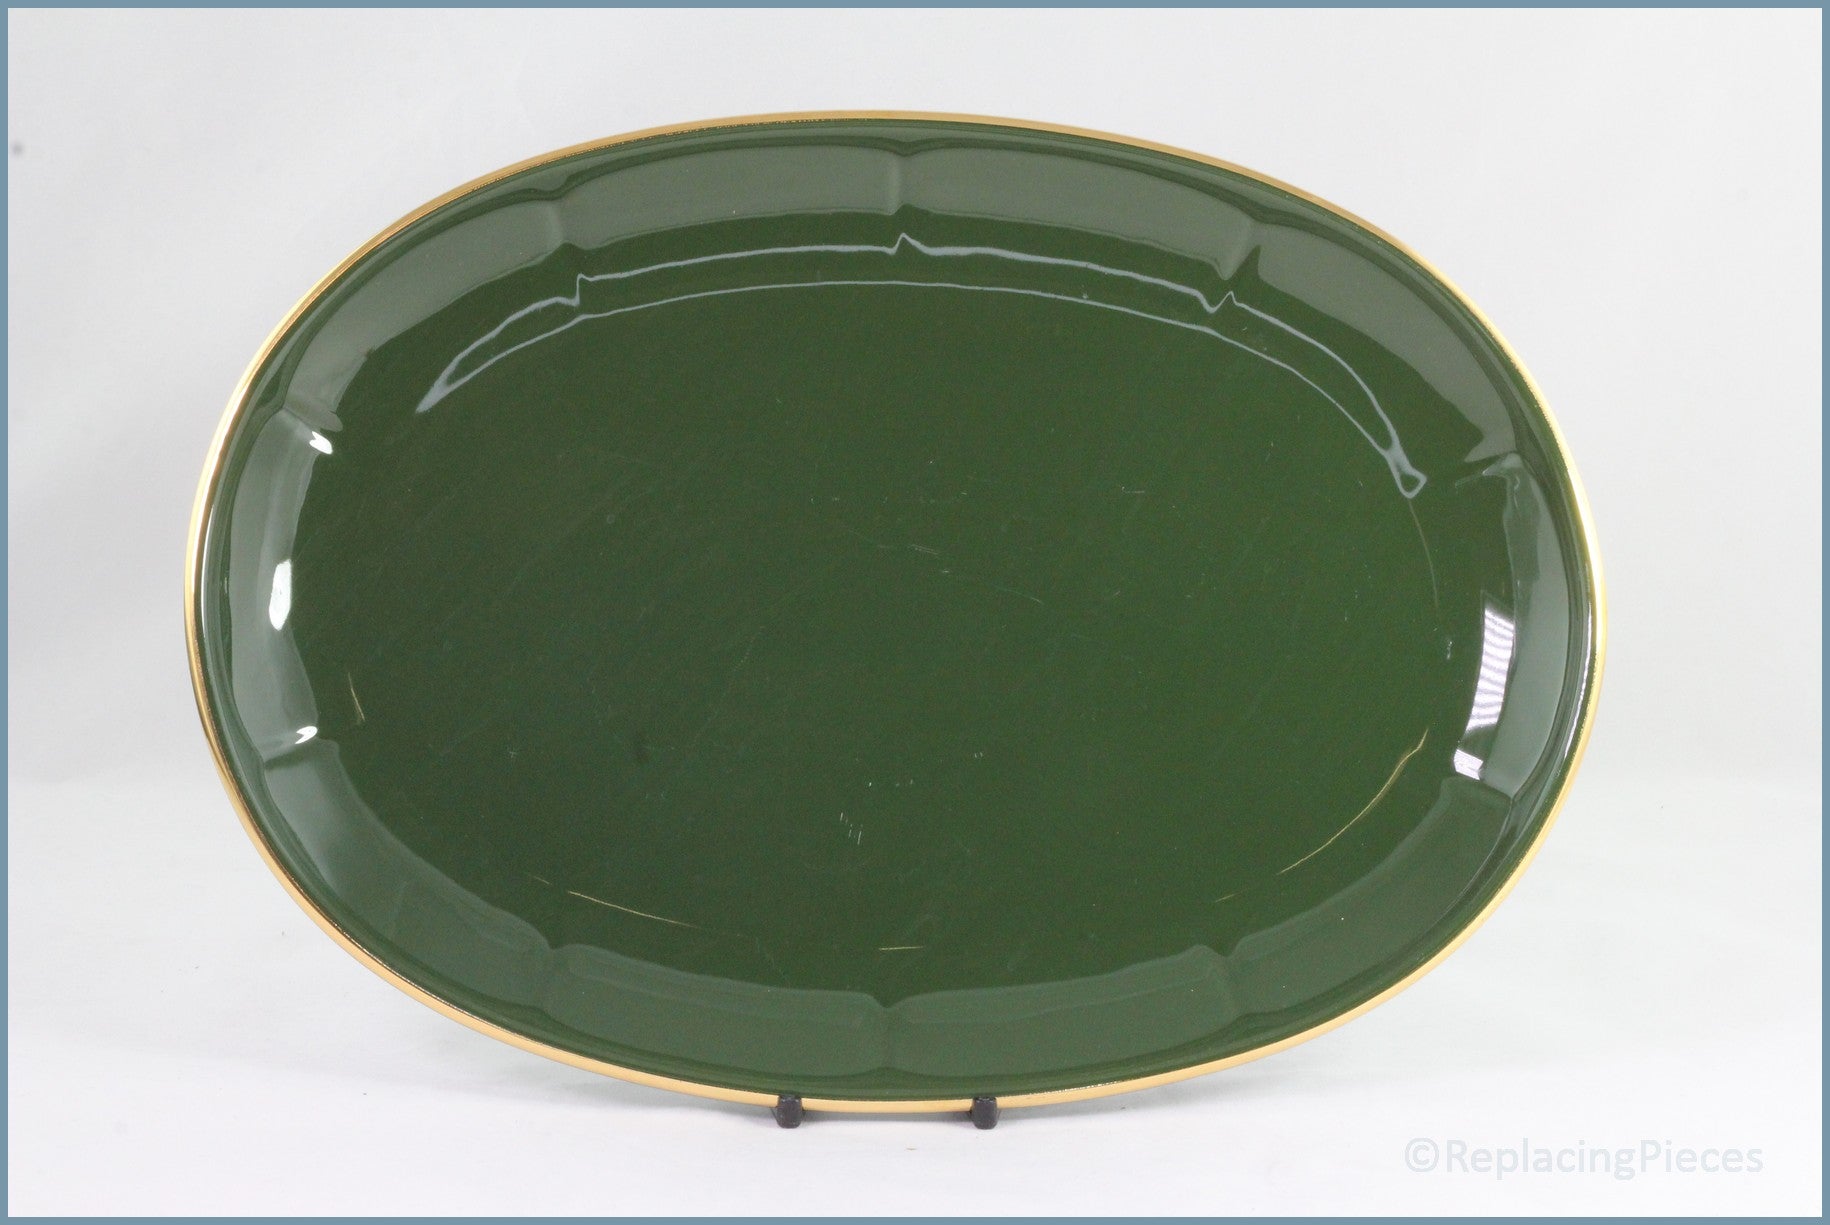 Apilco - Bistro (Green & Gold) - 12 1/8" Oval Platter